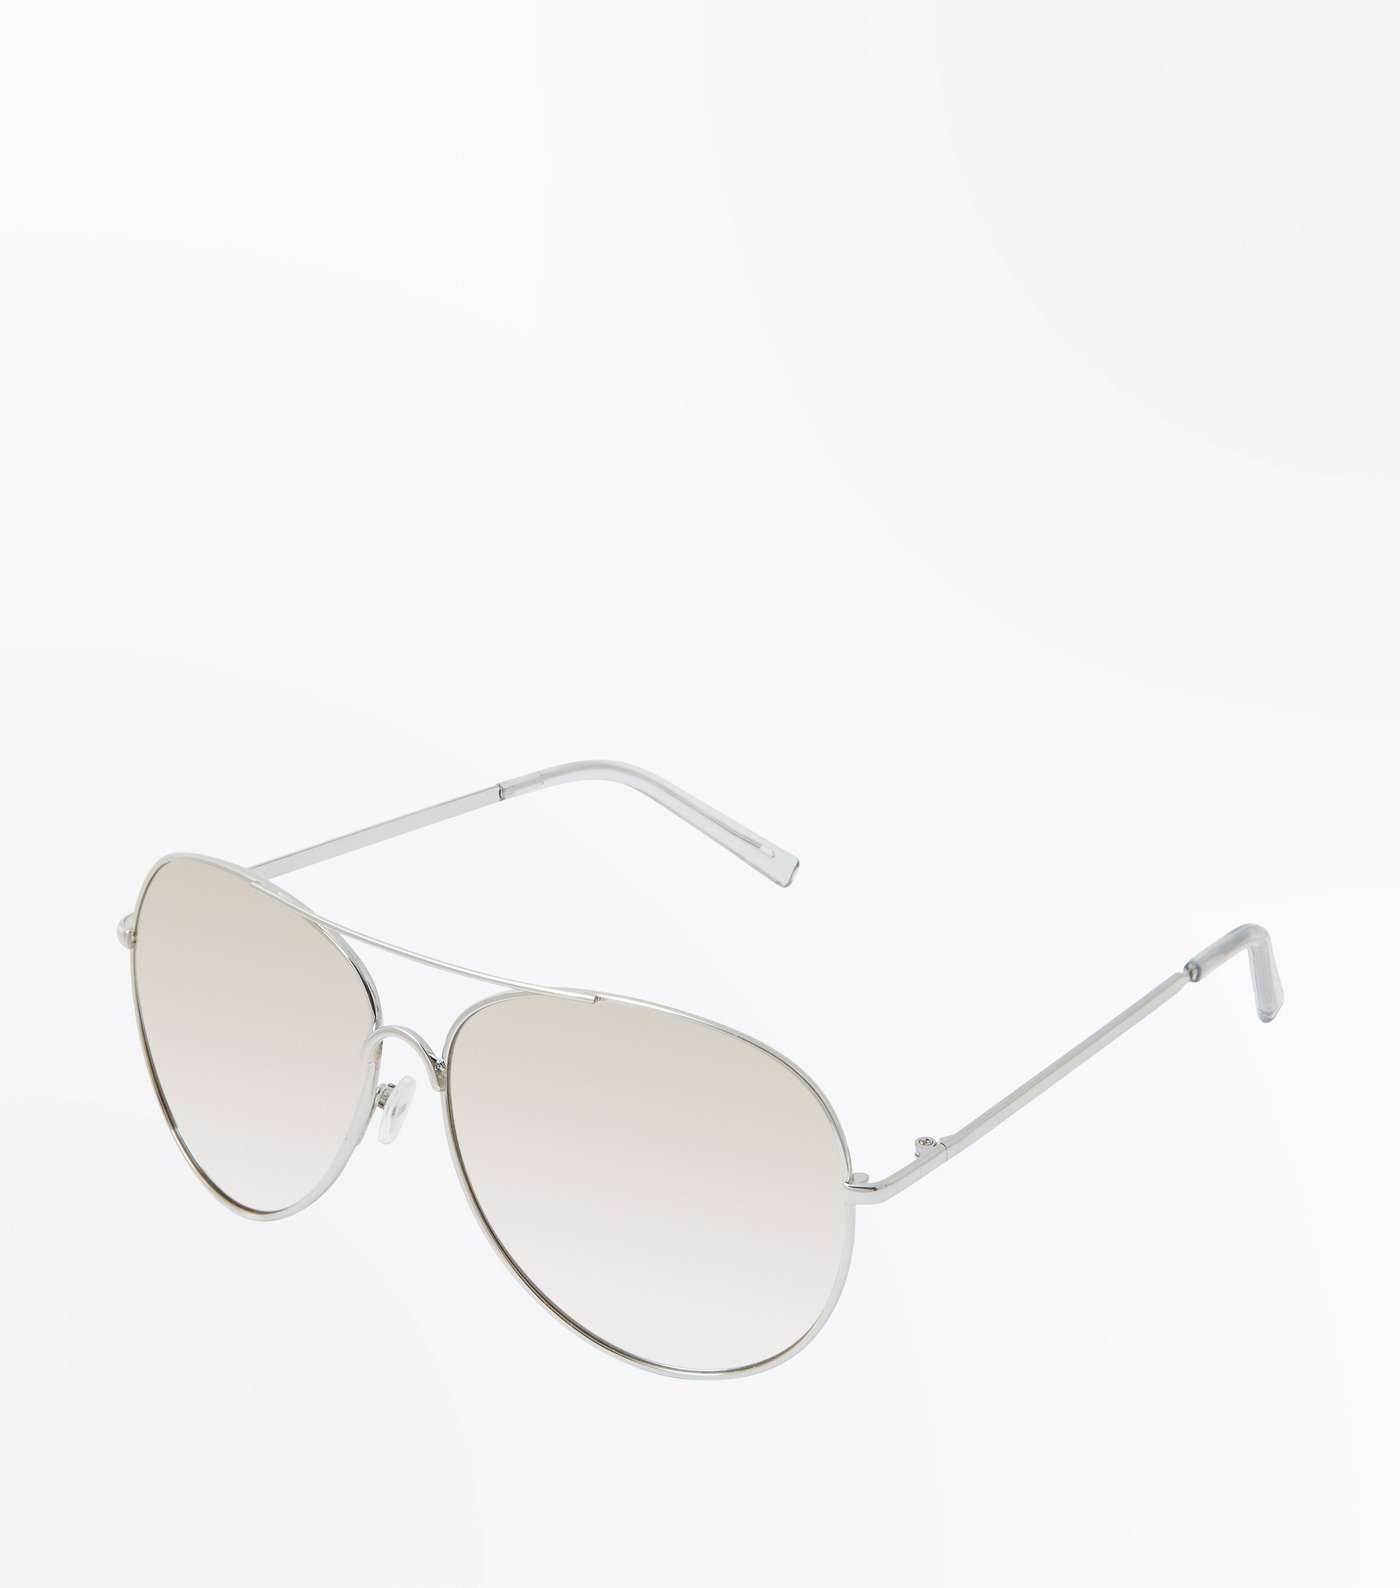 Silver Mirror Lens Aviator Style Sunglasses